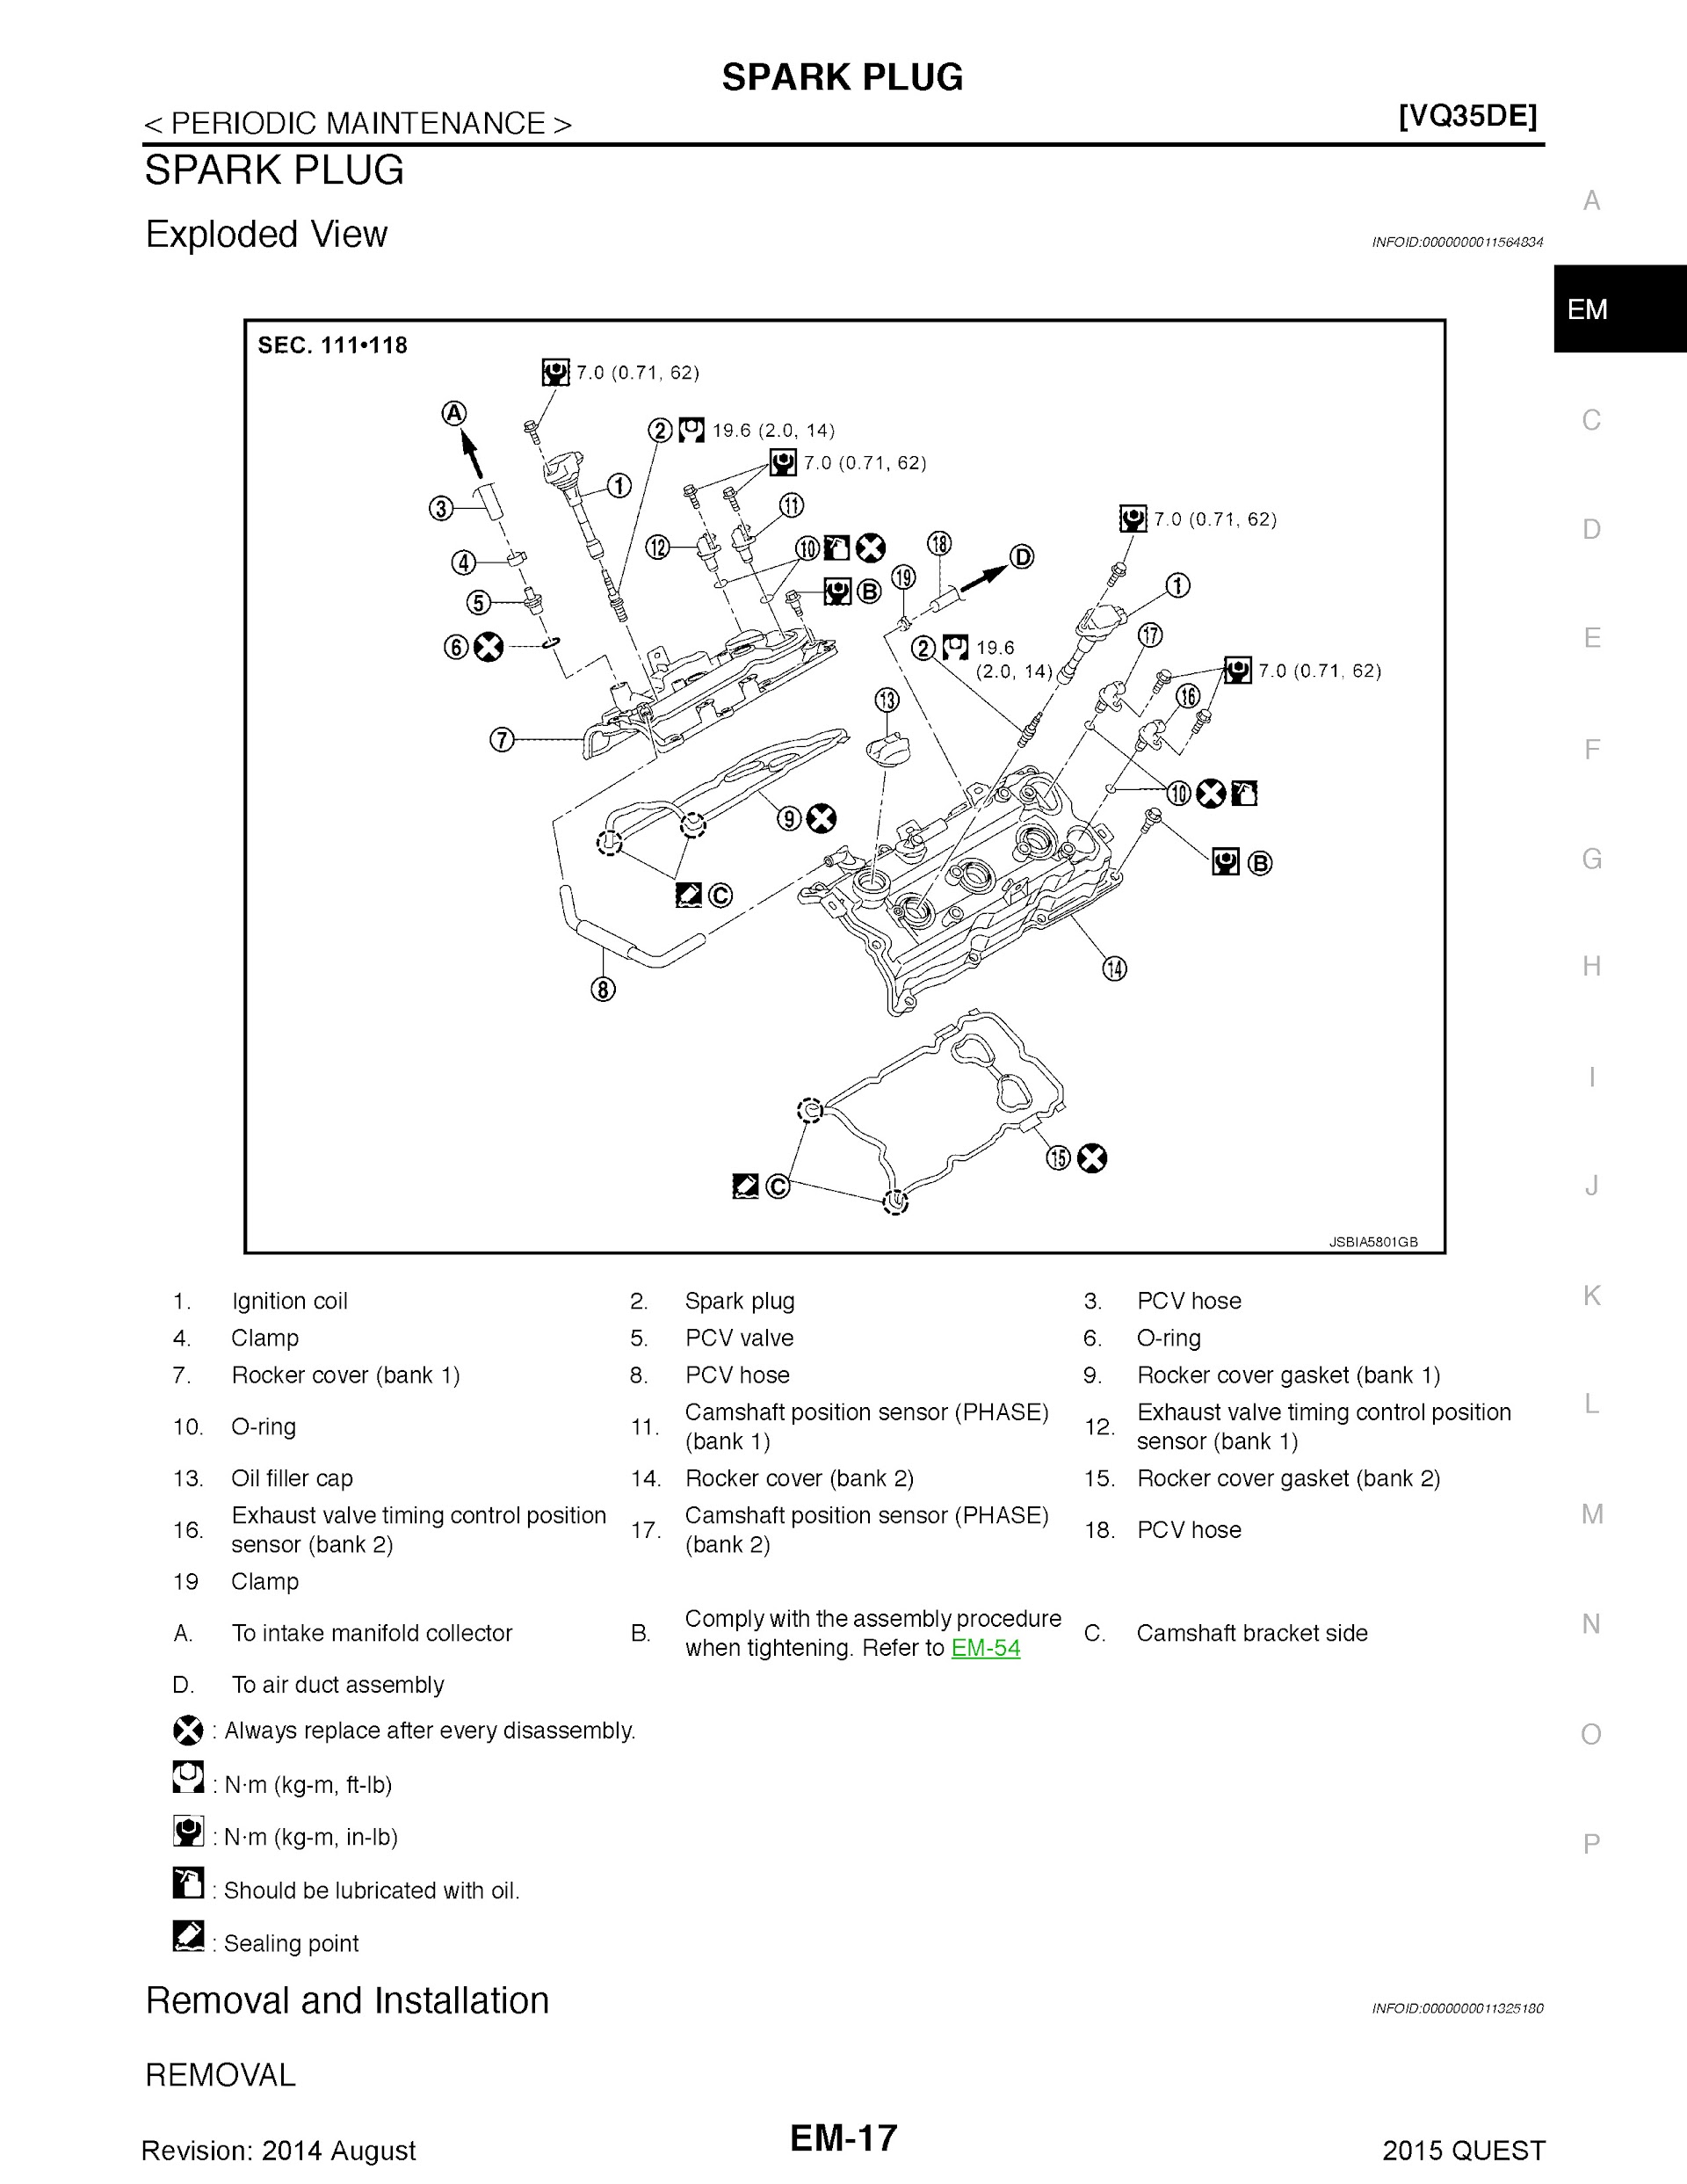 2015 Nissan Quest Repair Manual, Spark Plug Periodic Maintenance